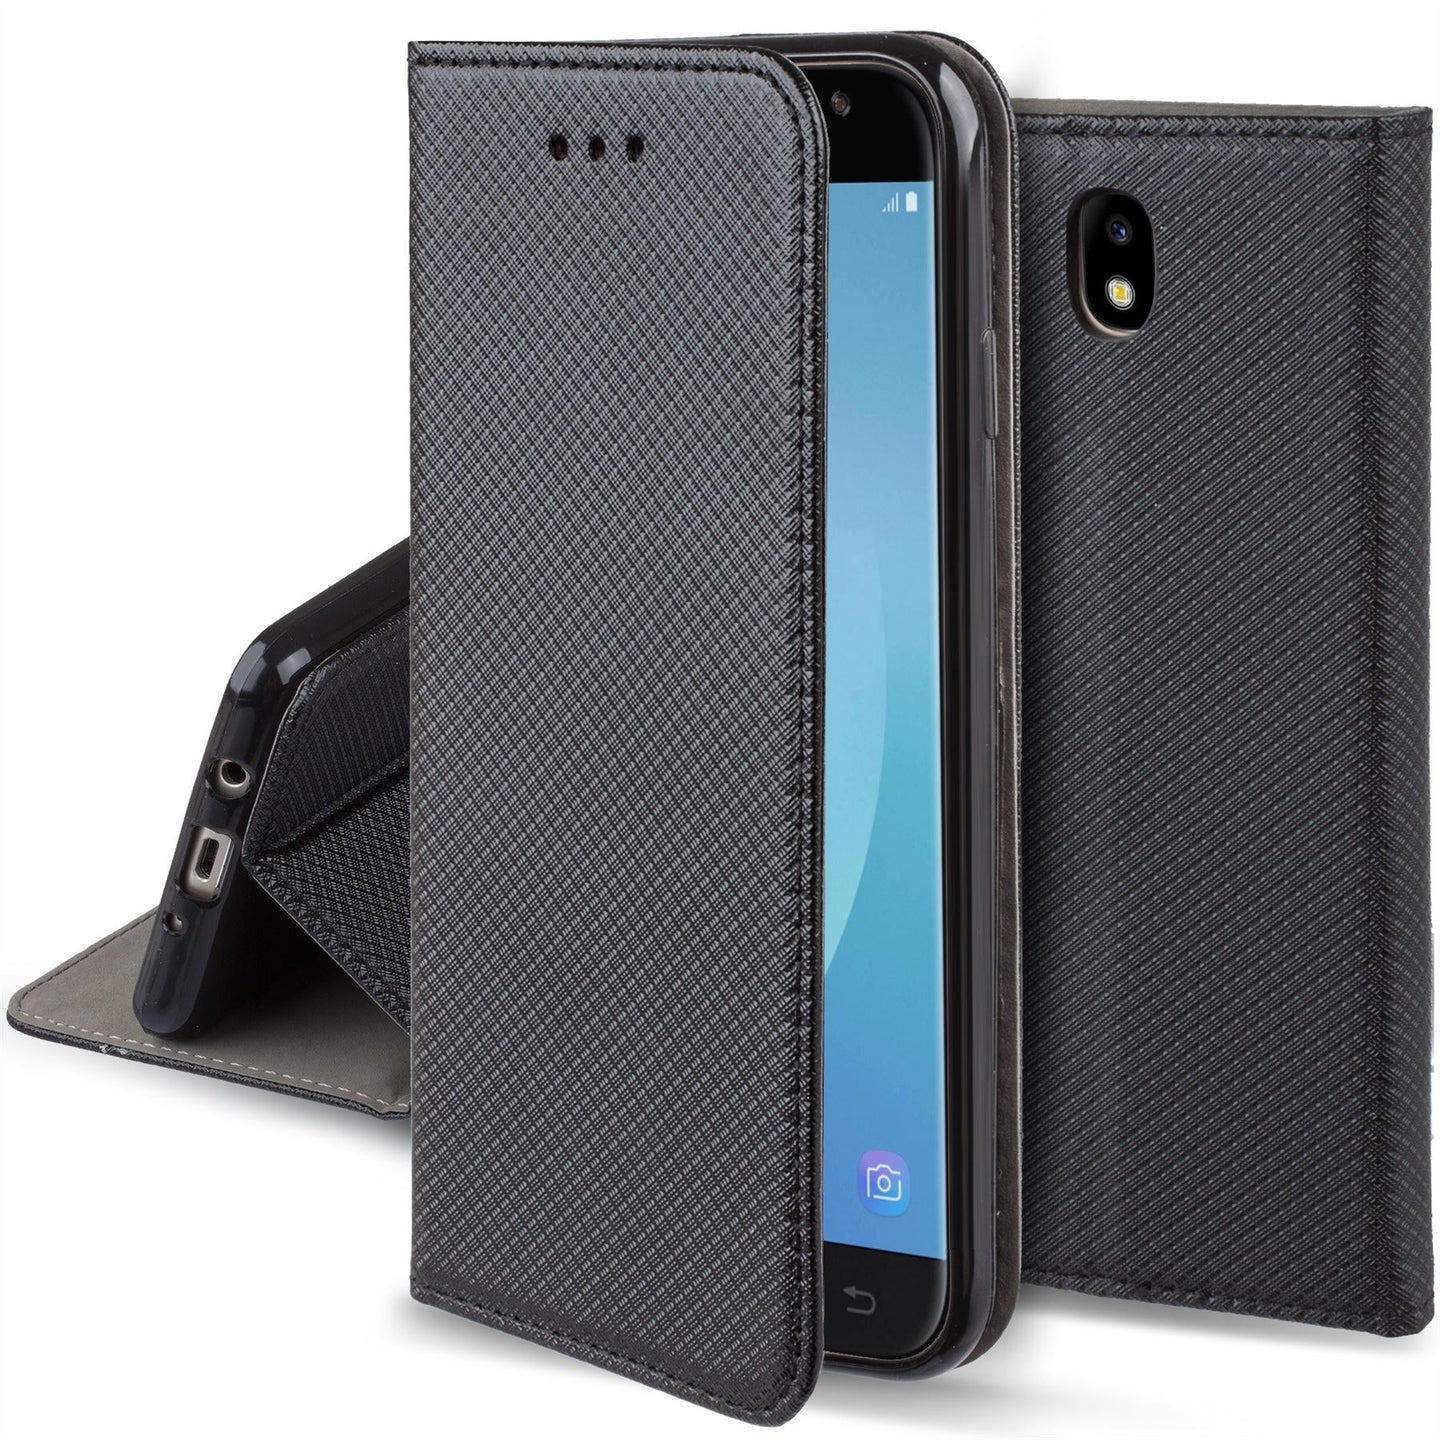 Moozy Case Flip Cover for Samsung J7 2017, Black - Smart Magnetic Flip Case with Card Holder and Stand